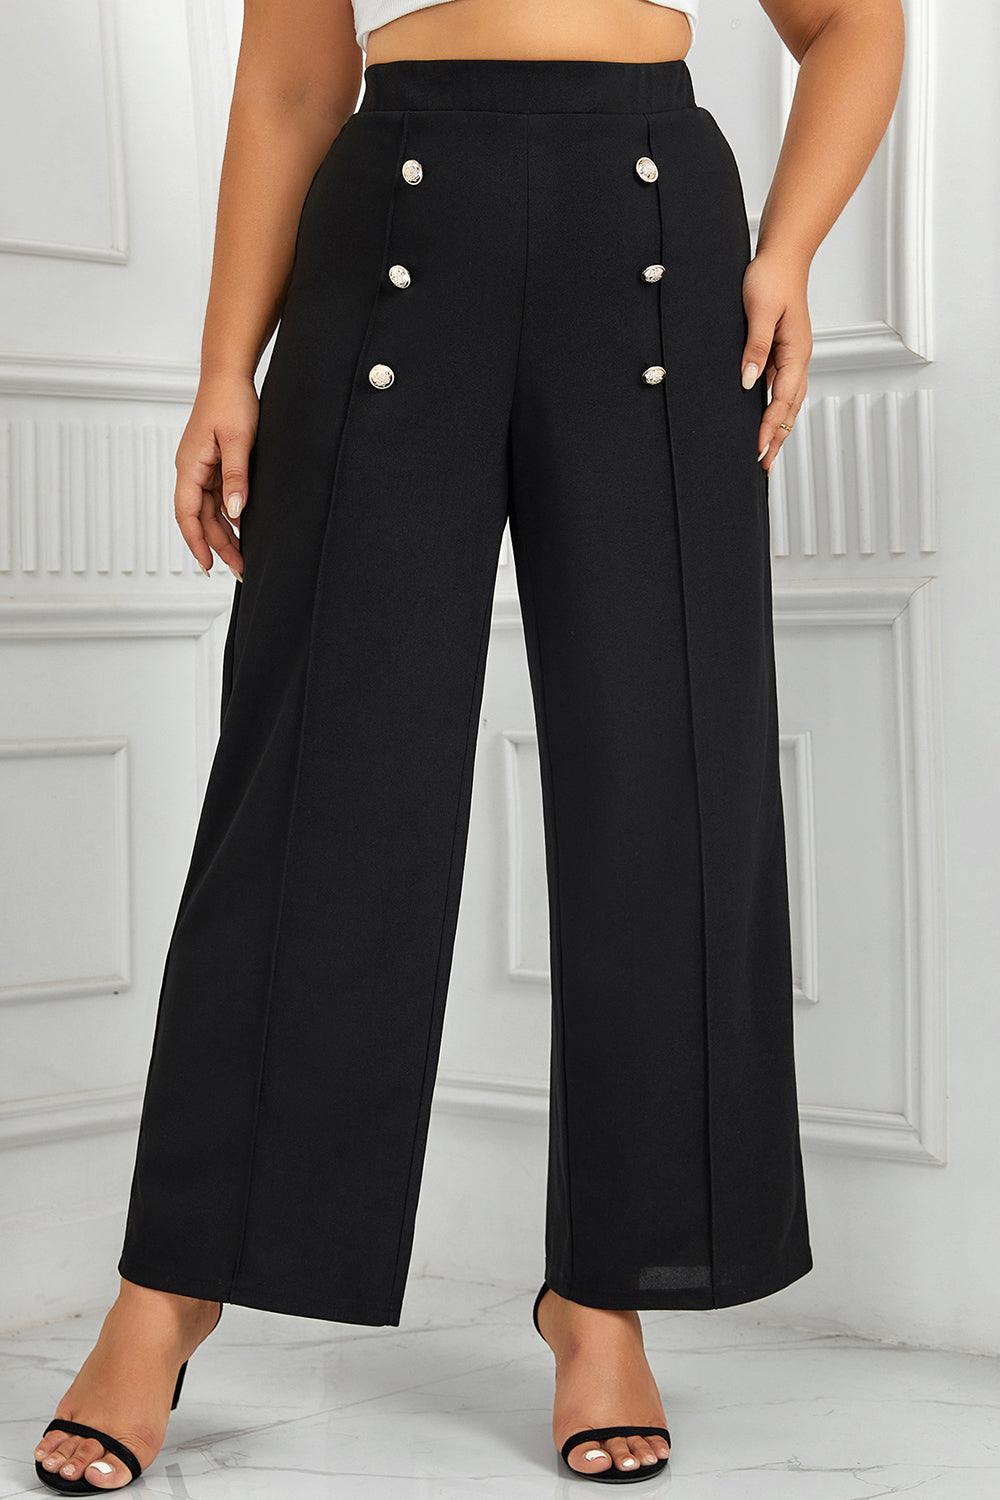 Buttoned Black Plus Size High Waisted Wide Leg Pants - MXSTUDIO.COM